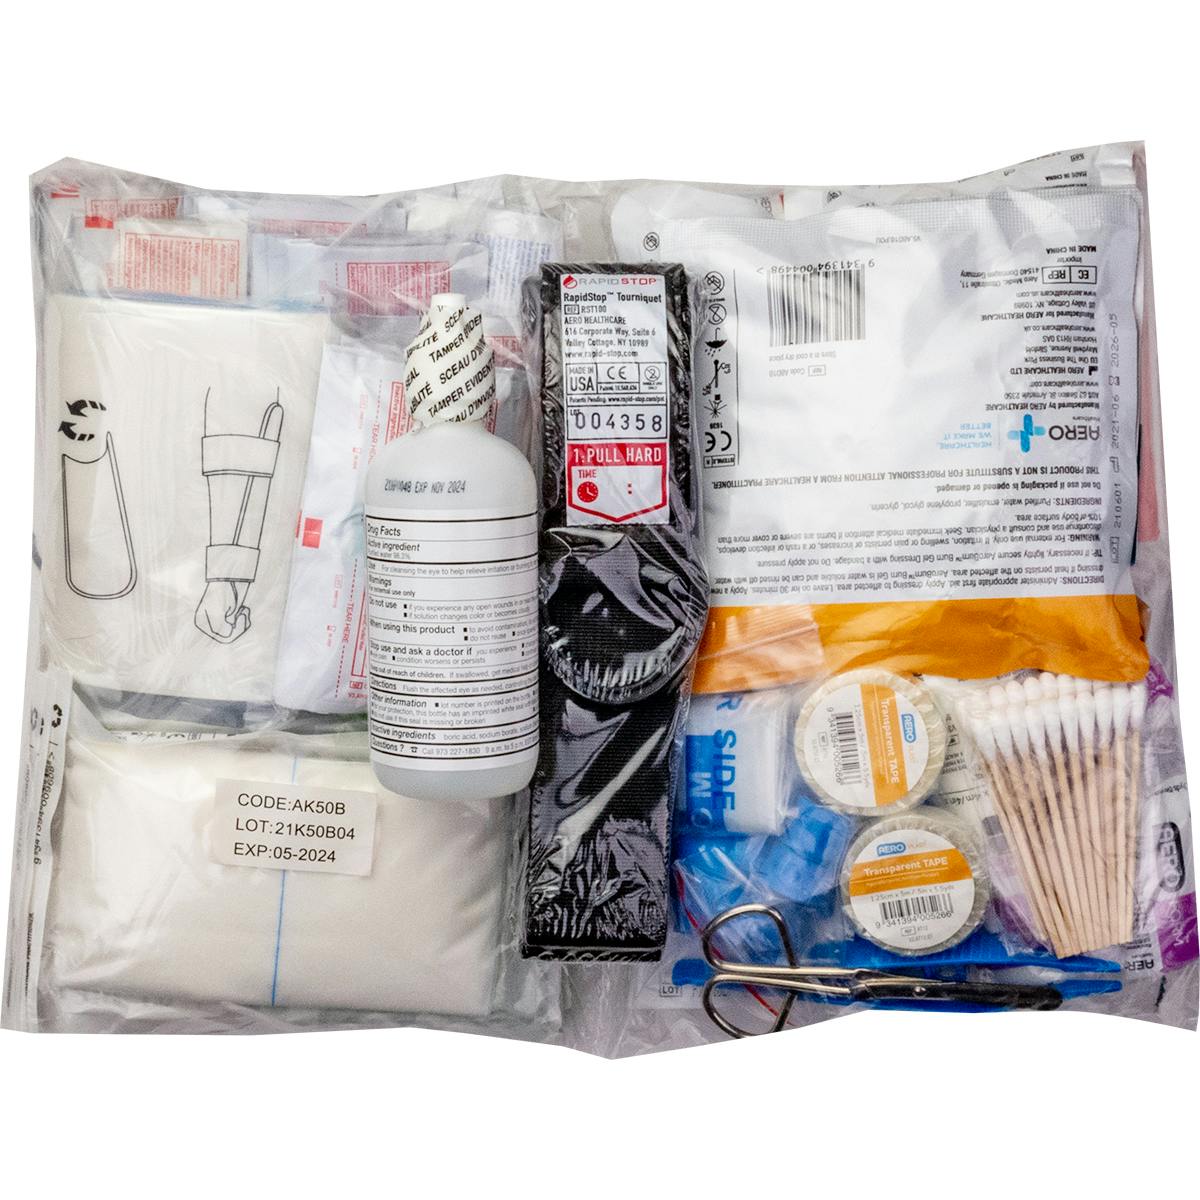 ANSI Class B First Aid Refill Pouches - 50 Person, Clear (299-21050B-RP) - KIT_0